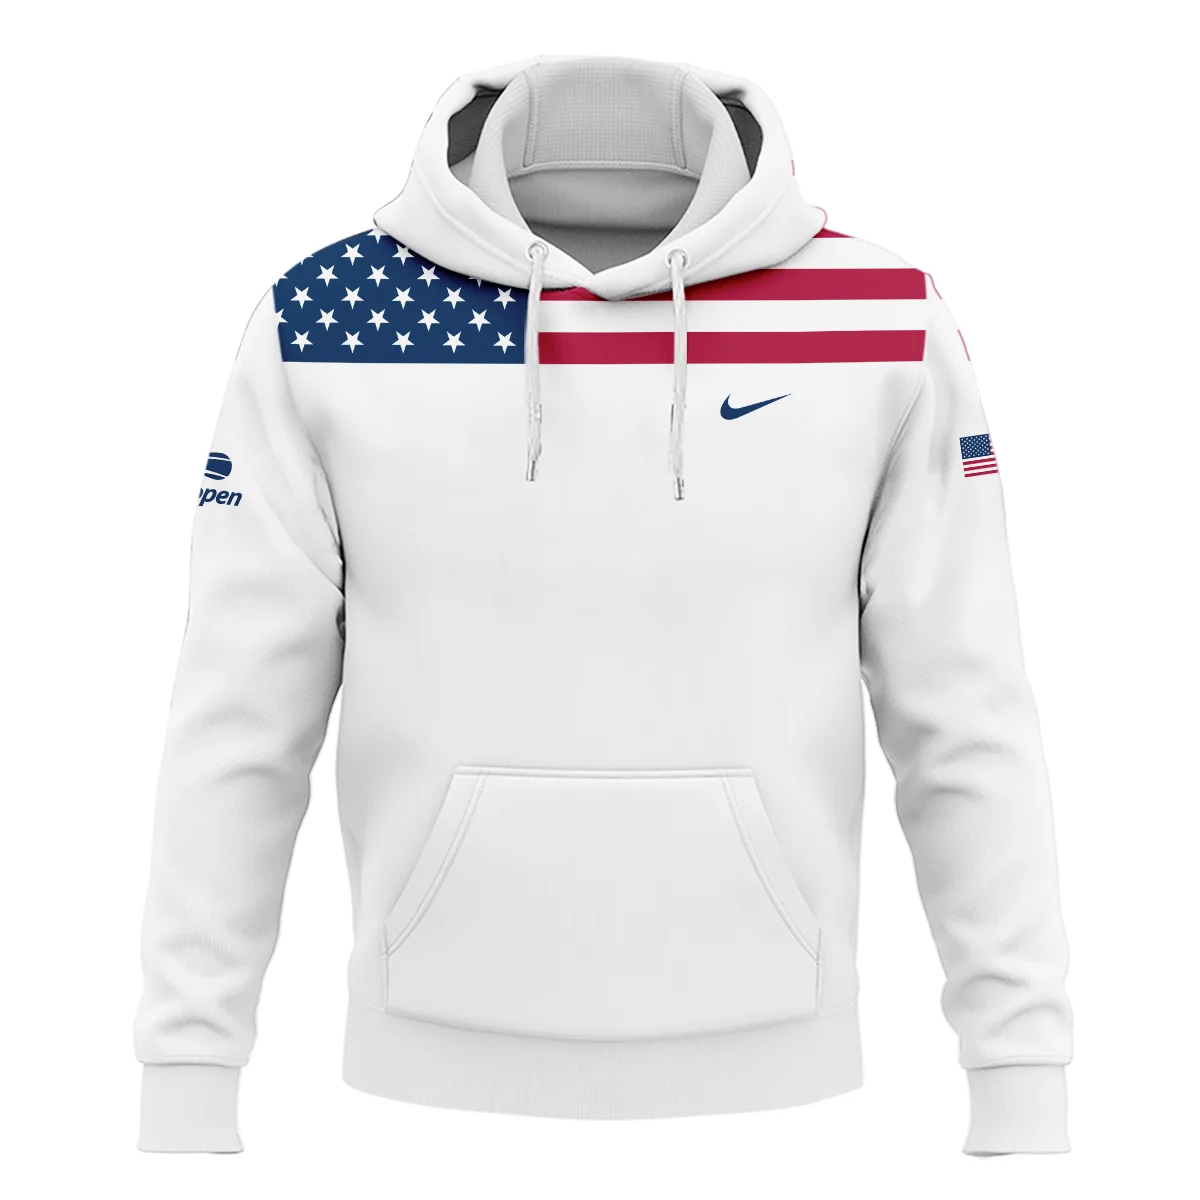 US Open Tennis Champions Nike USA Flag White Polo Shirt Mandarin Collar Polo Shirt